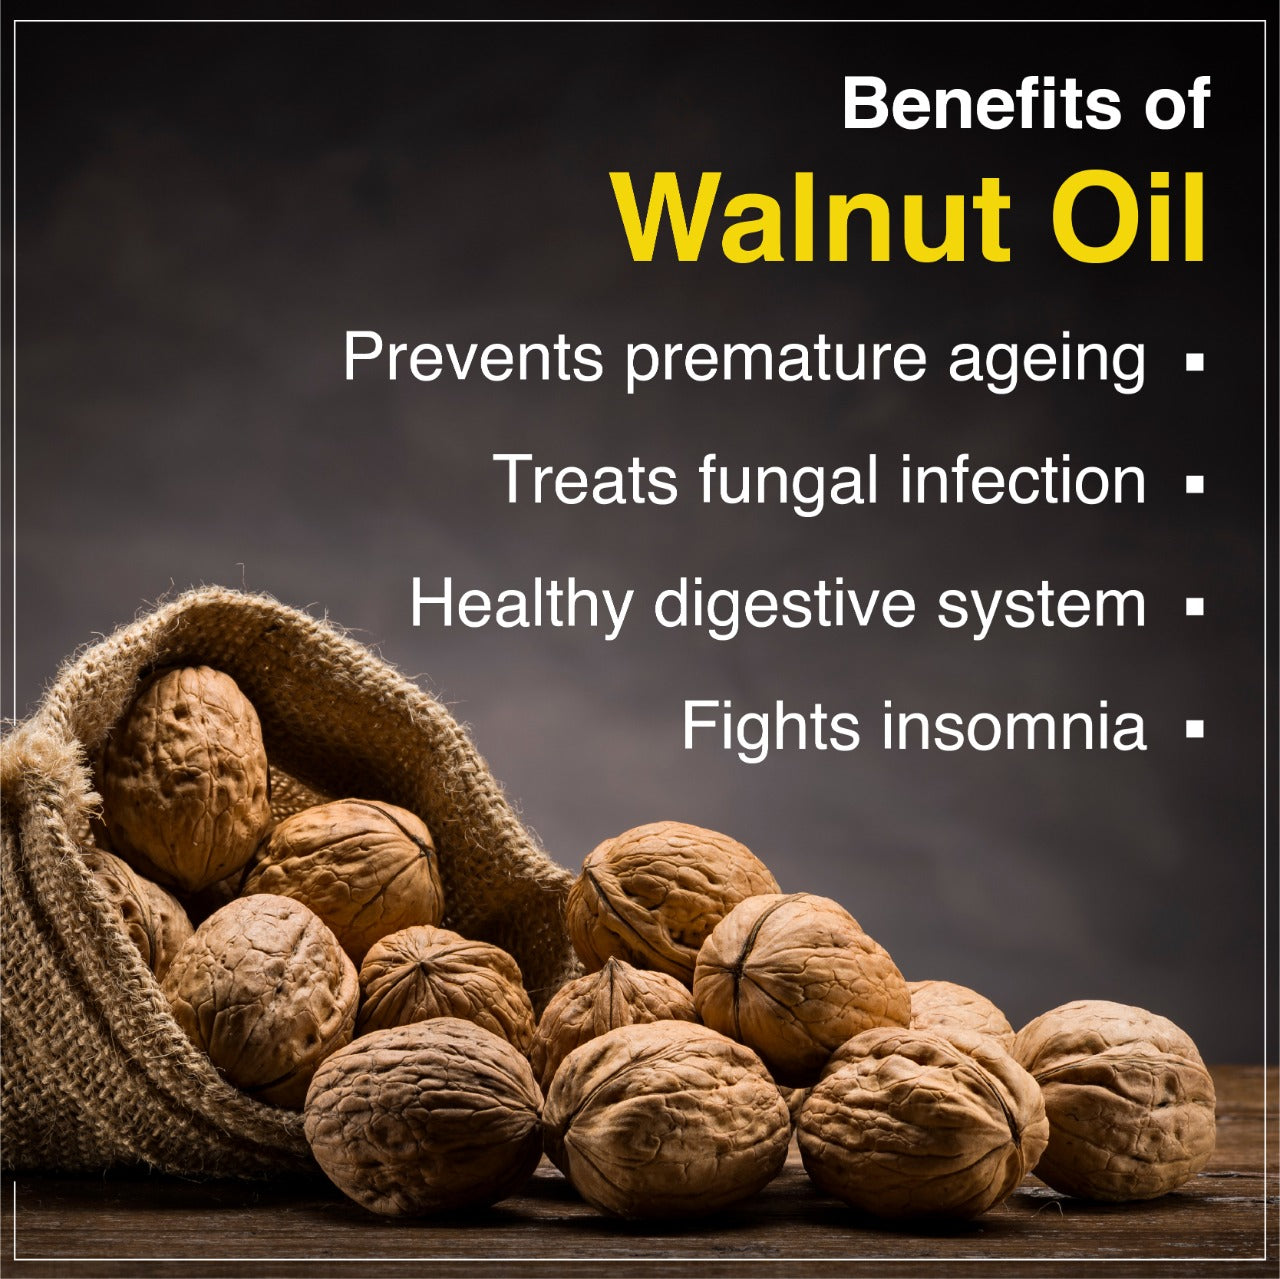 Benefits of Walnut Oil